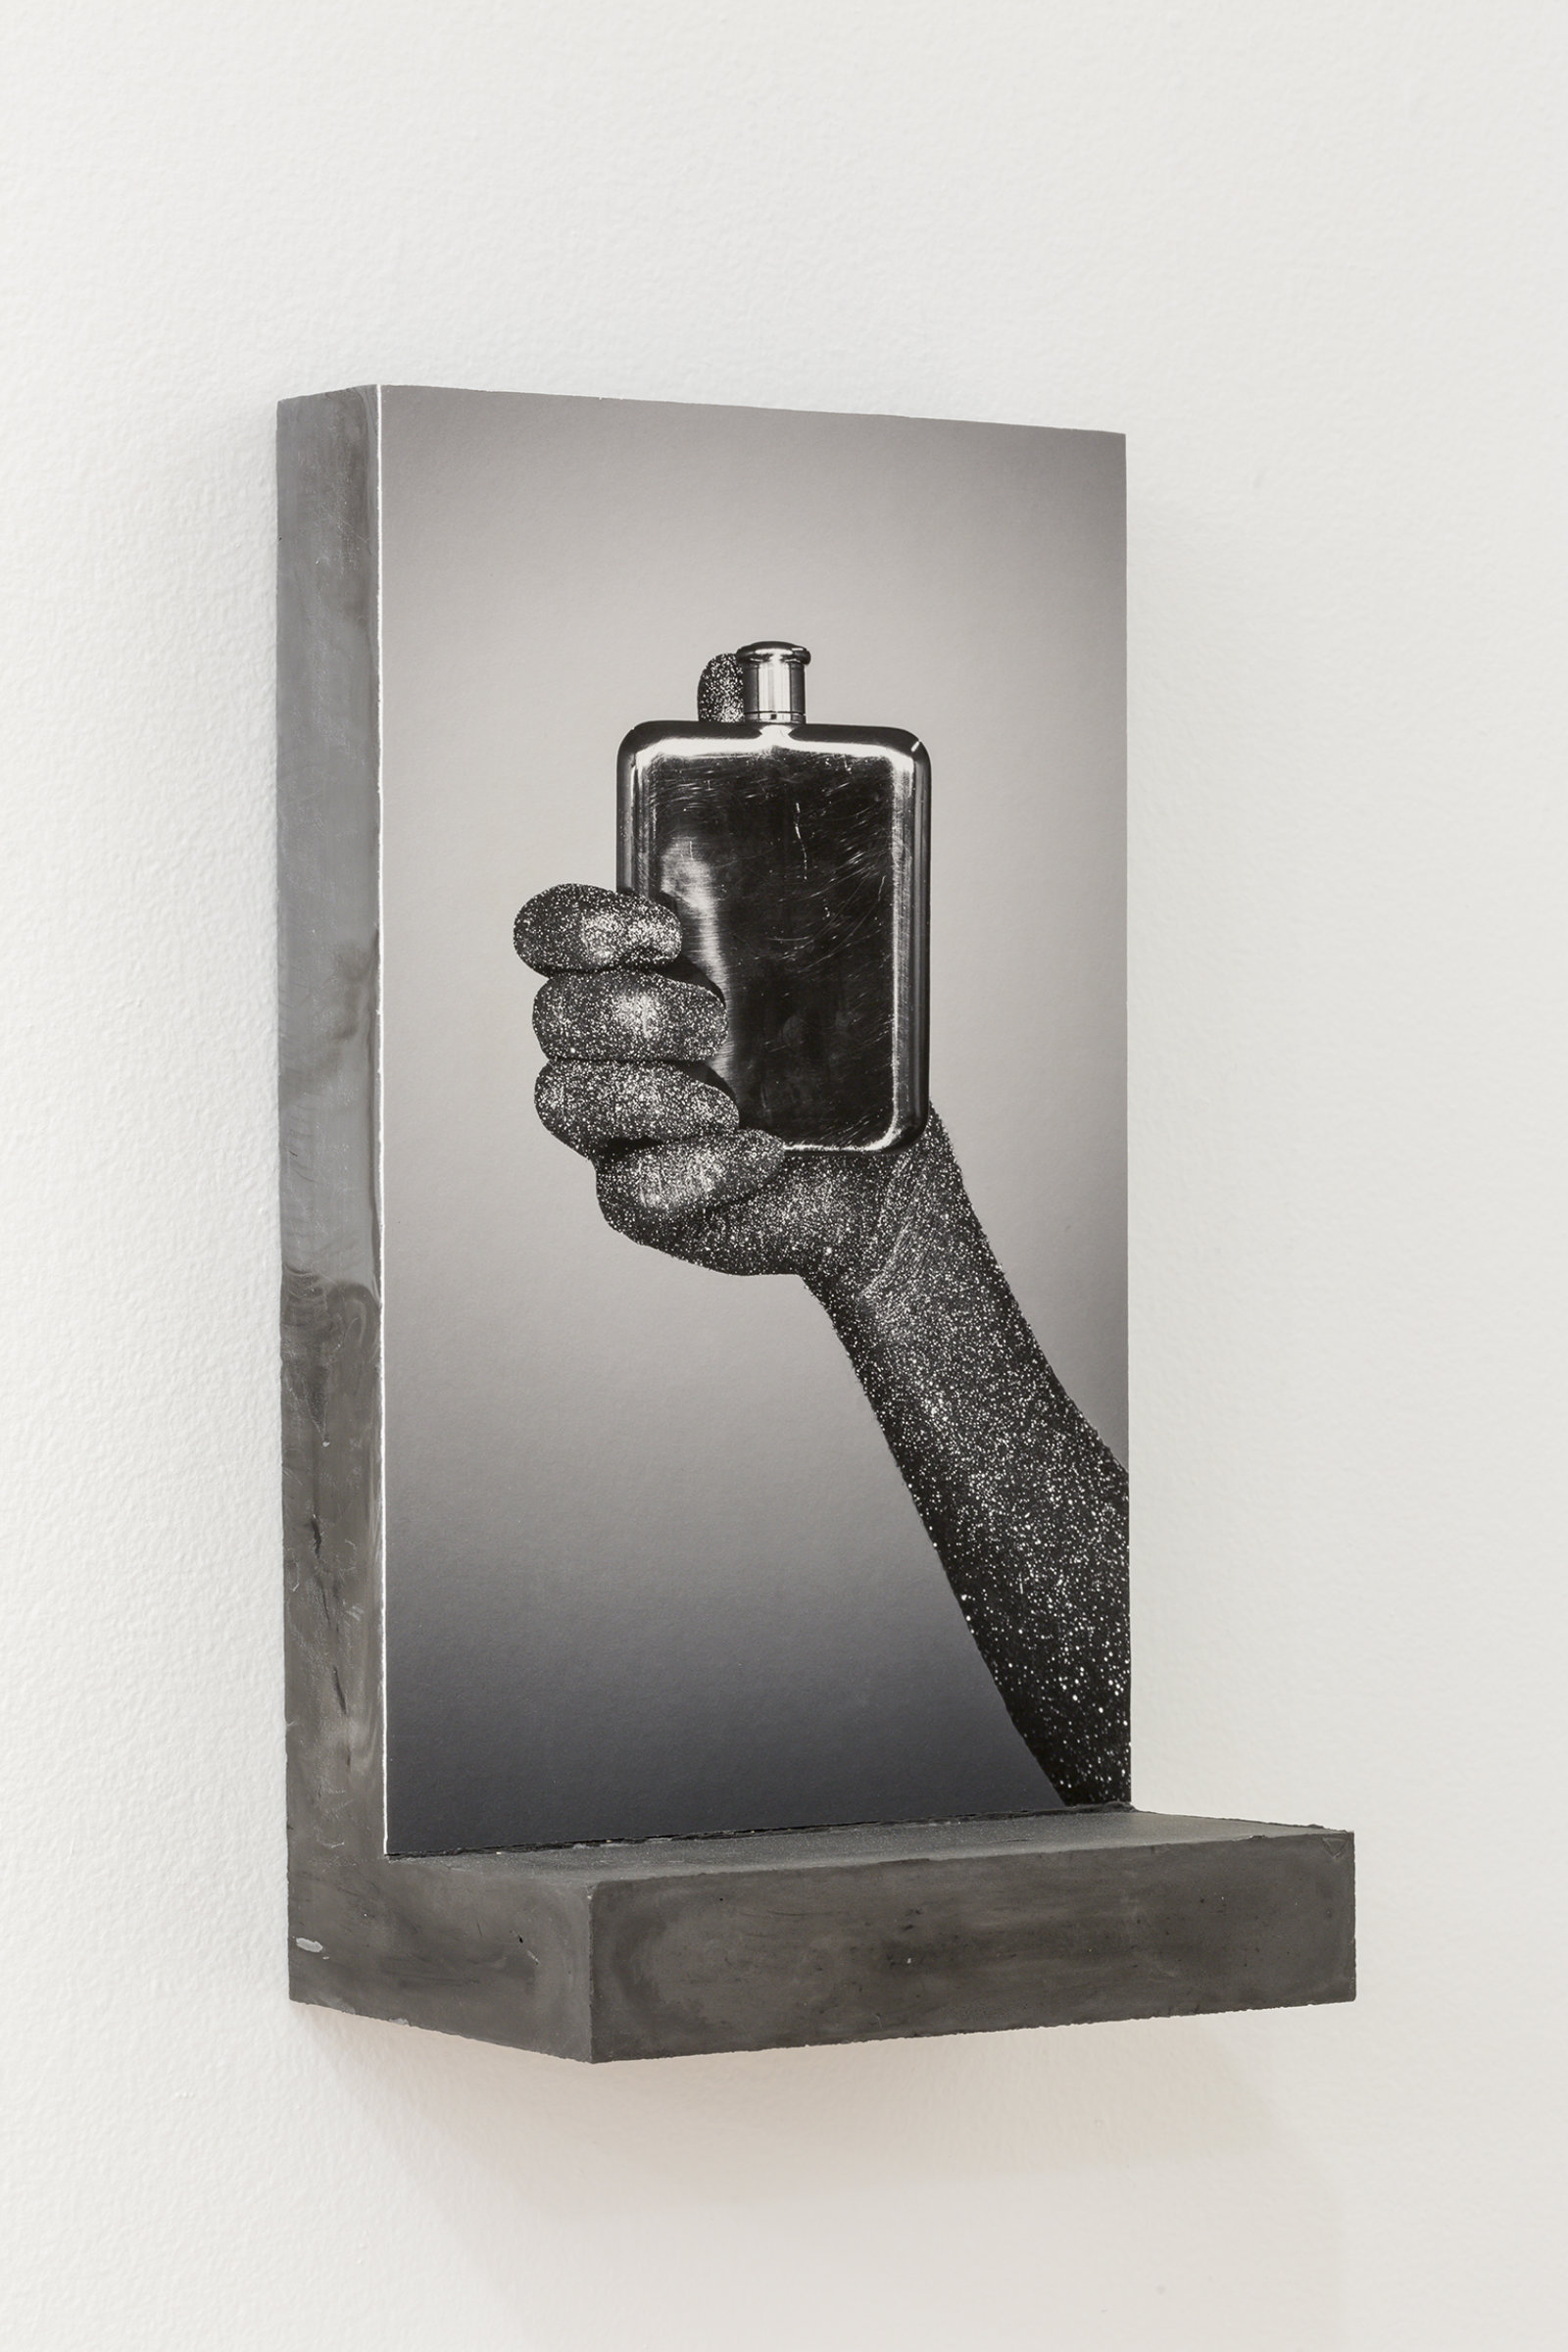 Valérie Blass, Vices - pontifier, 2014, photographic print on plaster base, pigment, 13 x 8 x 6 in. (34 x 21 x 14 cm)